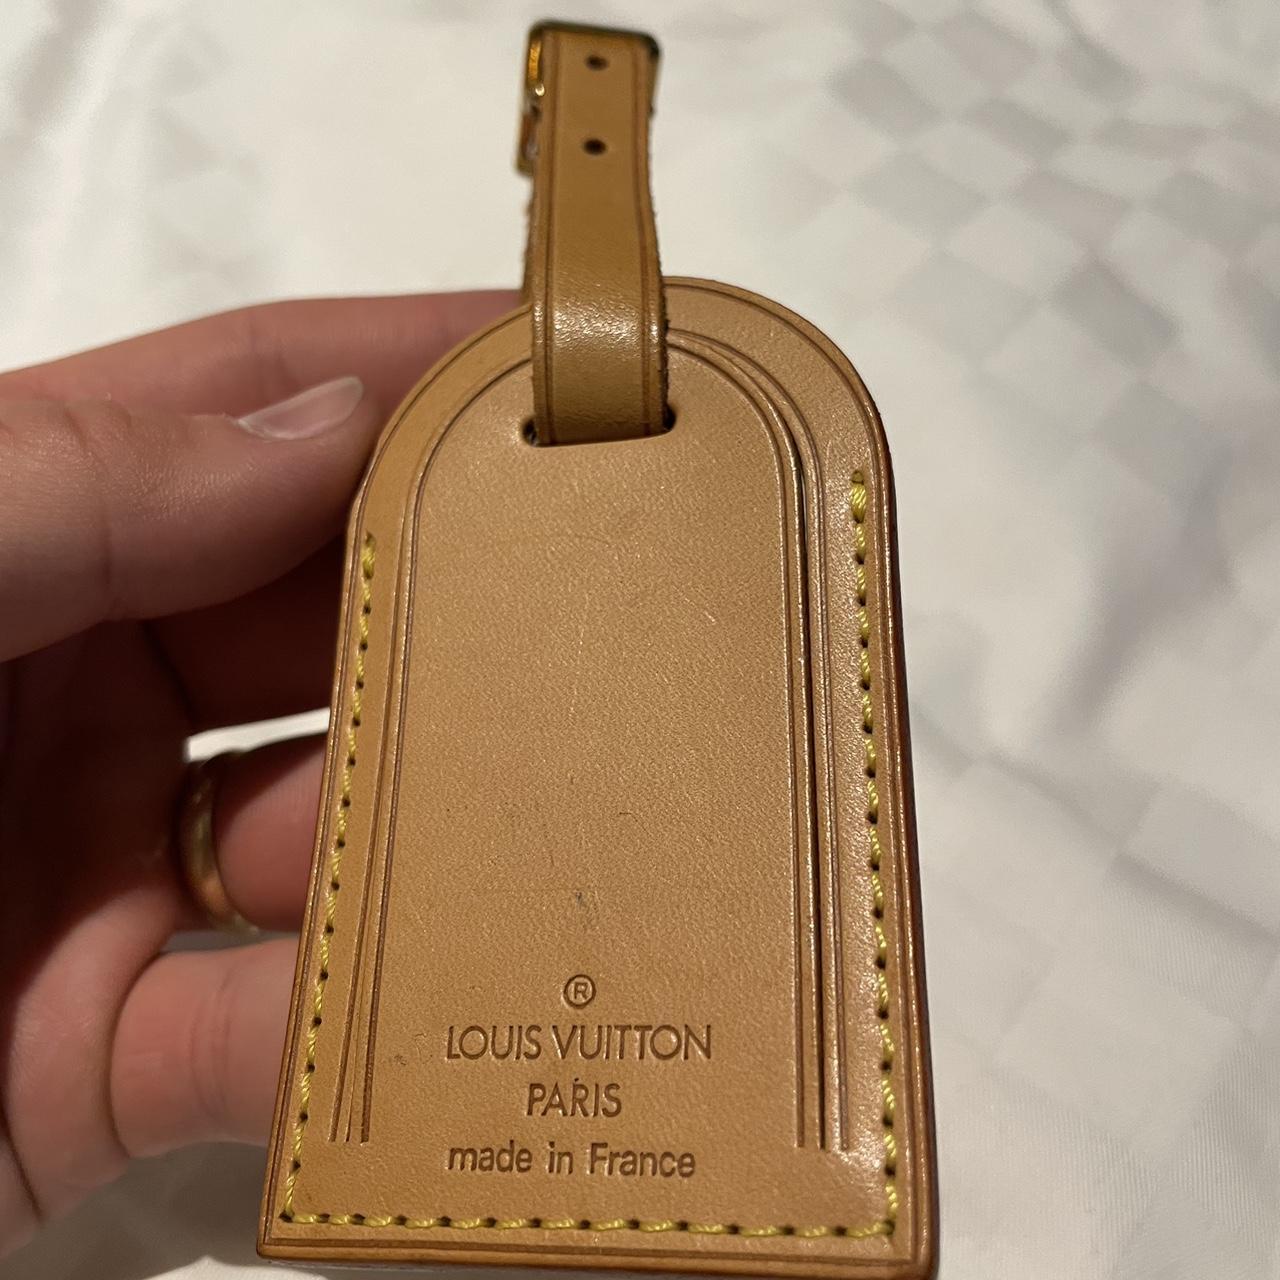 Louis Vuitton ready to wear monogram Jacquard fleece - Depop